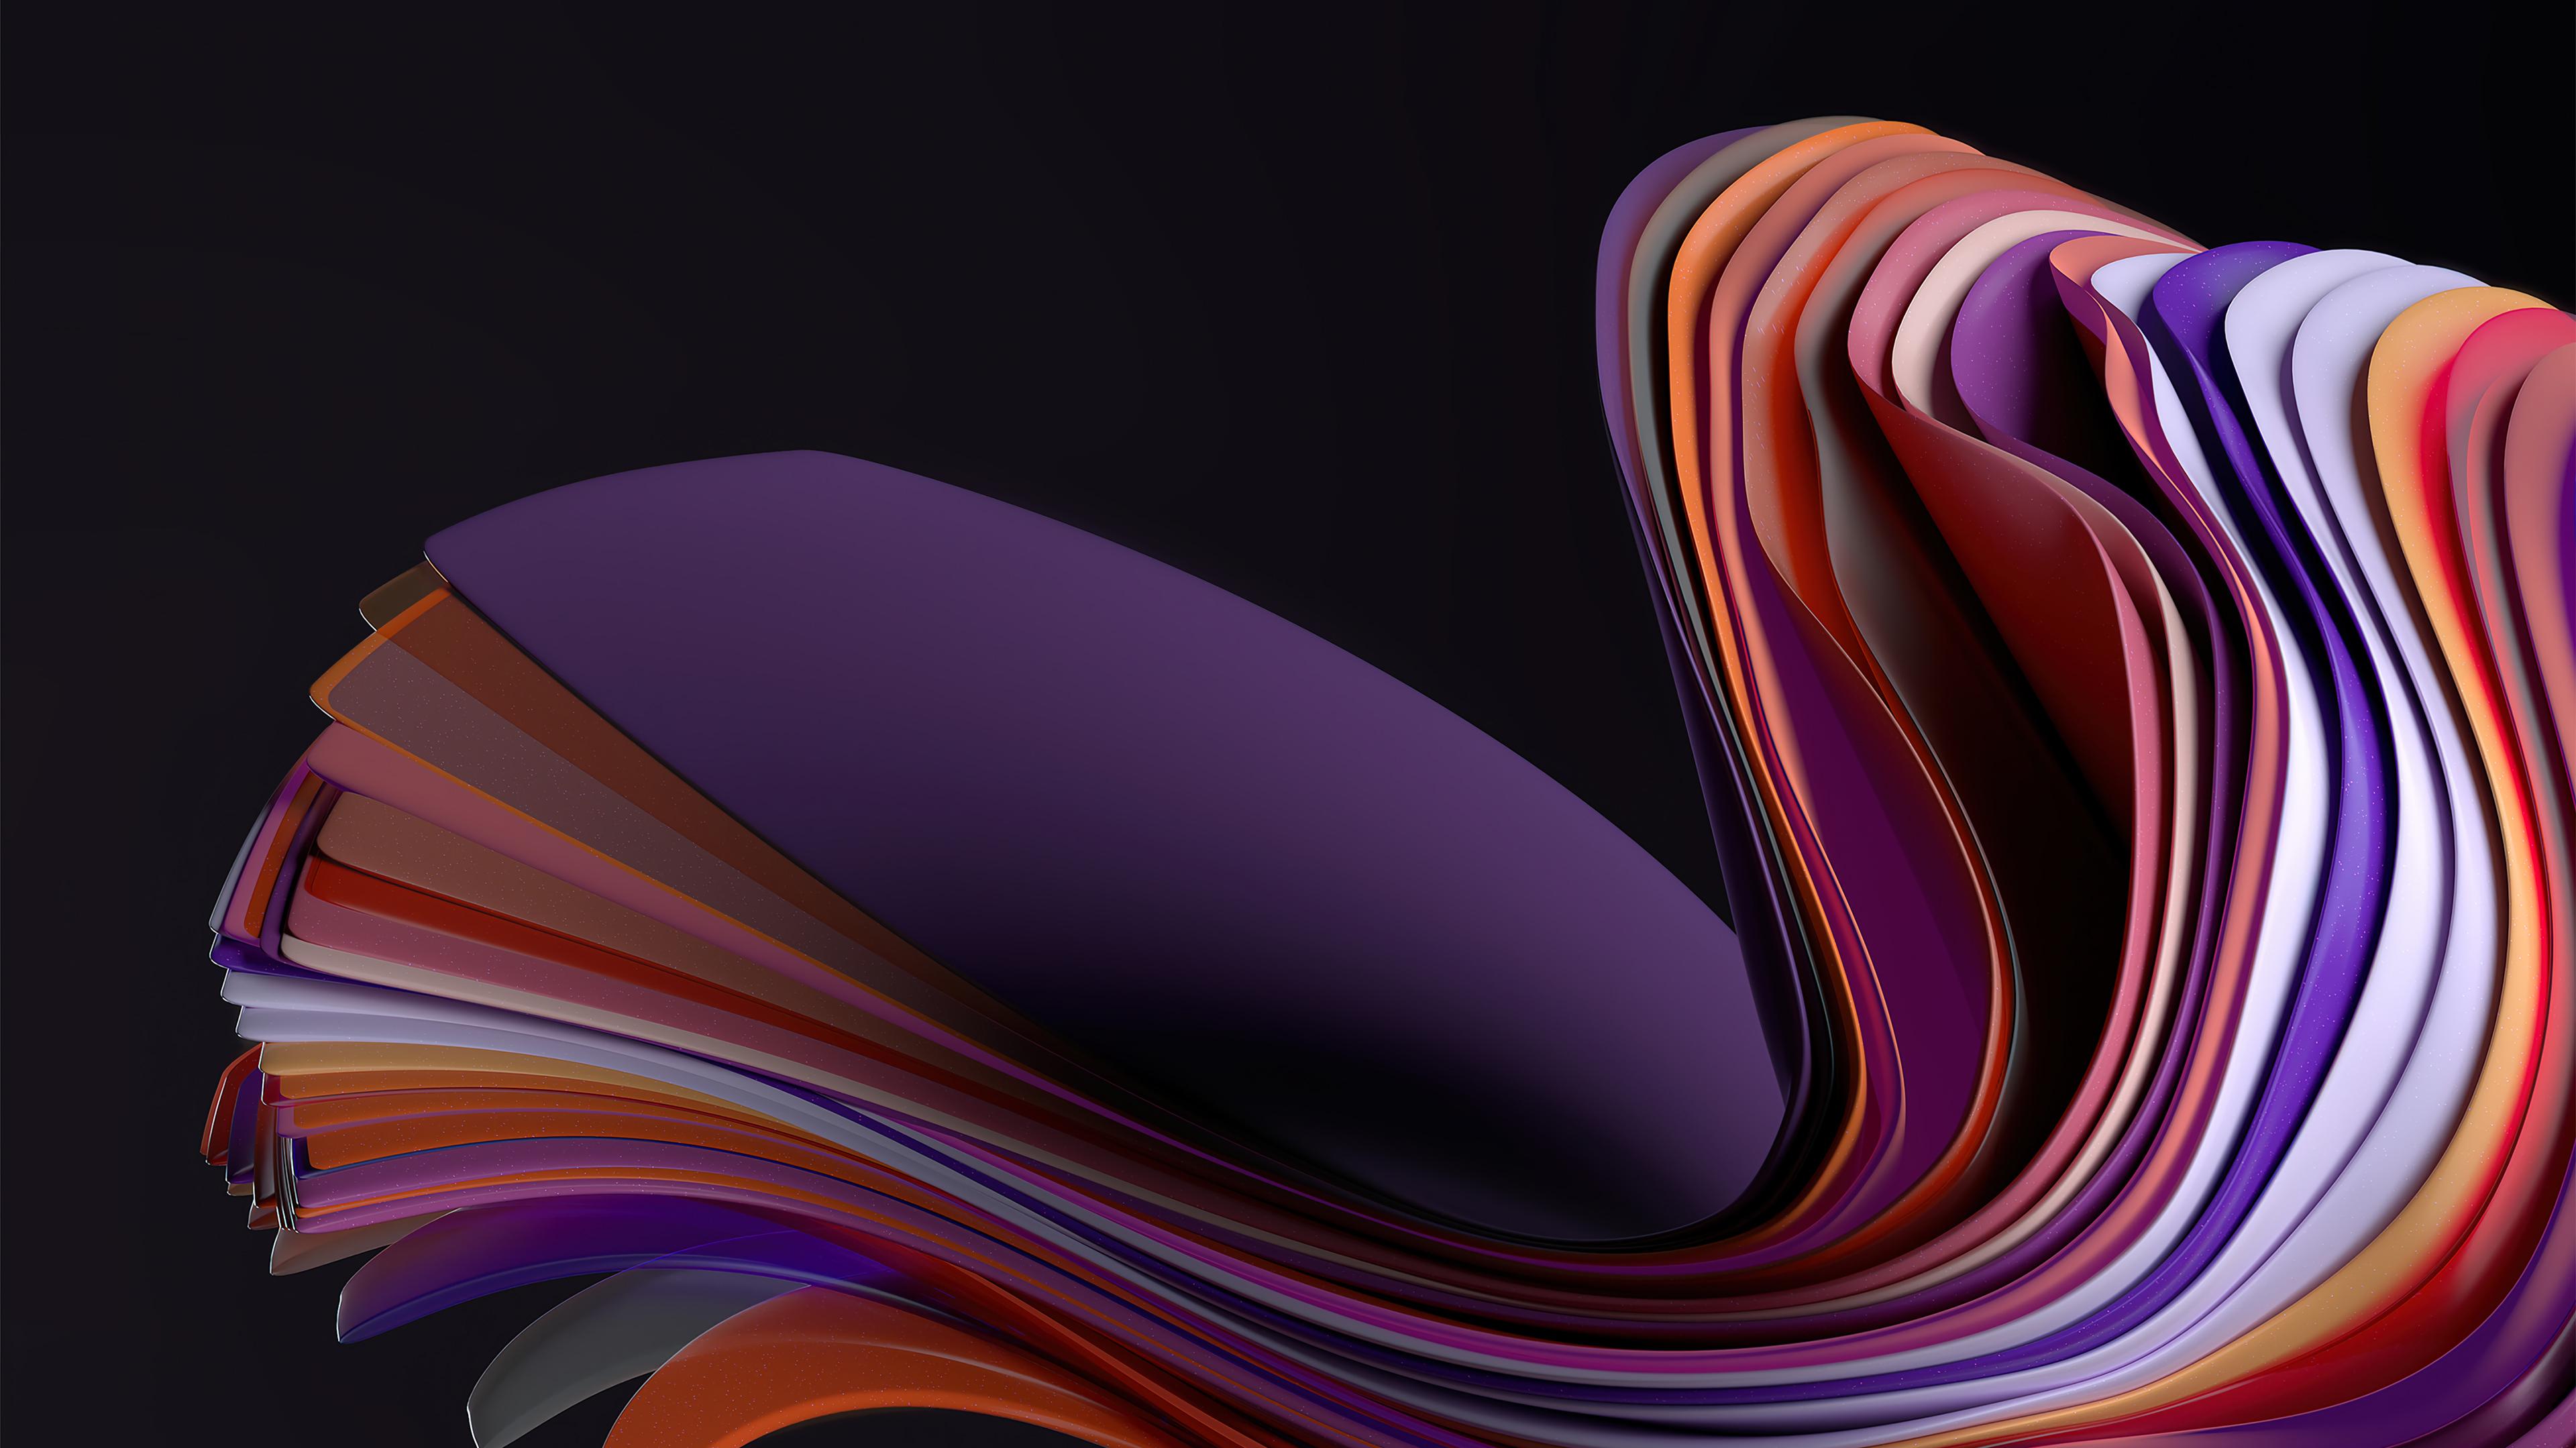 Windows Background Colorful Abstract Wallpaper 4k Pc Desktop 430b